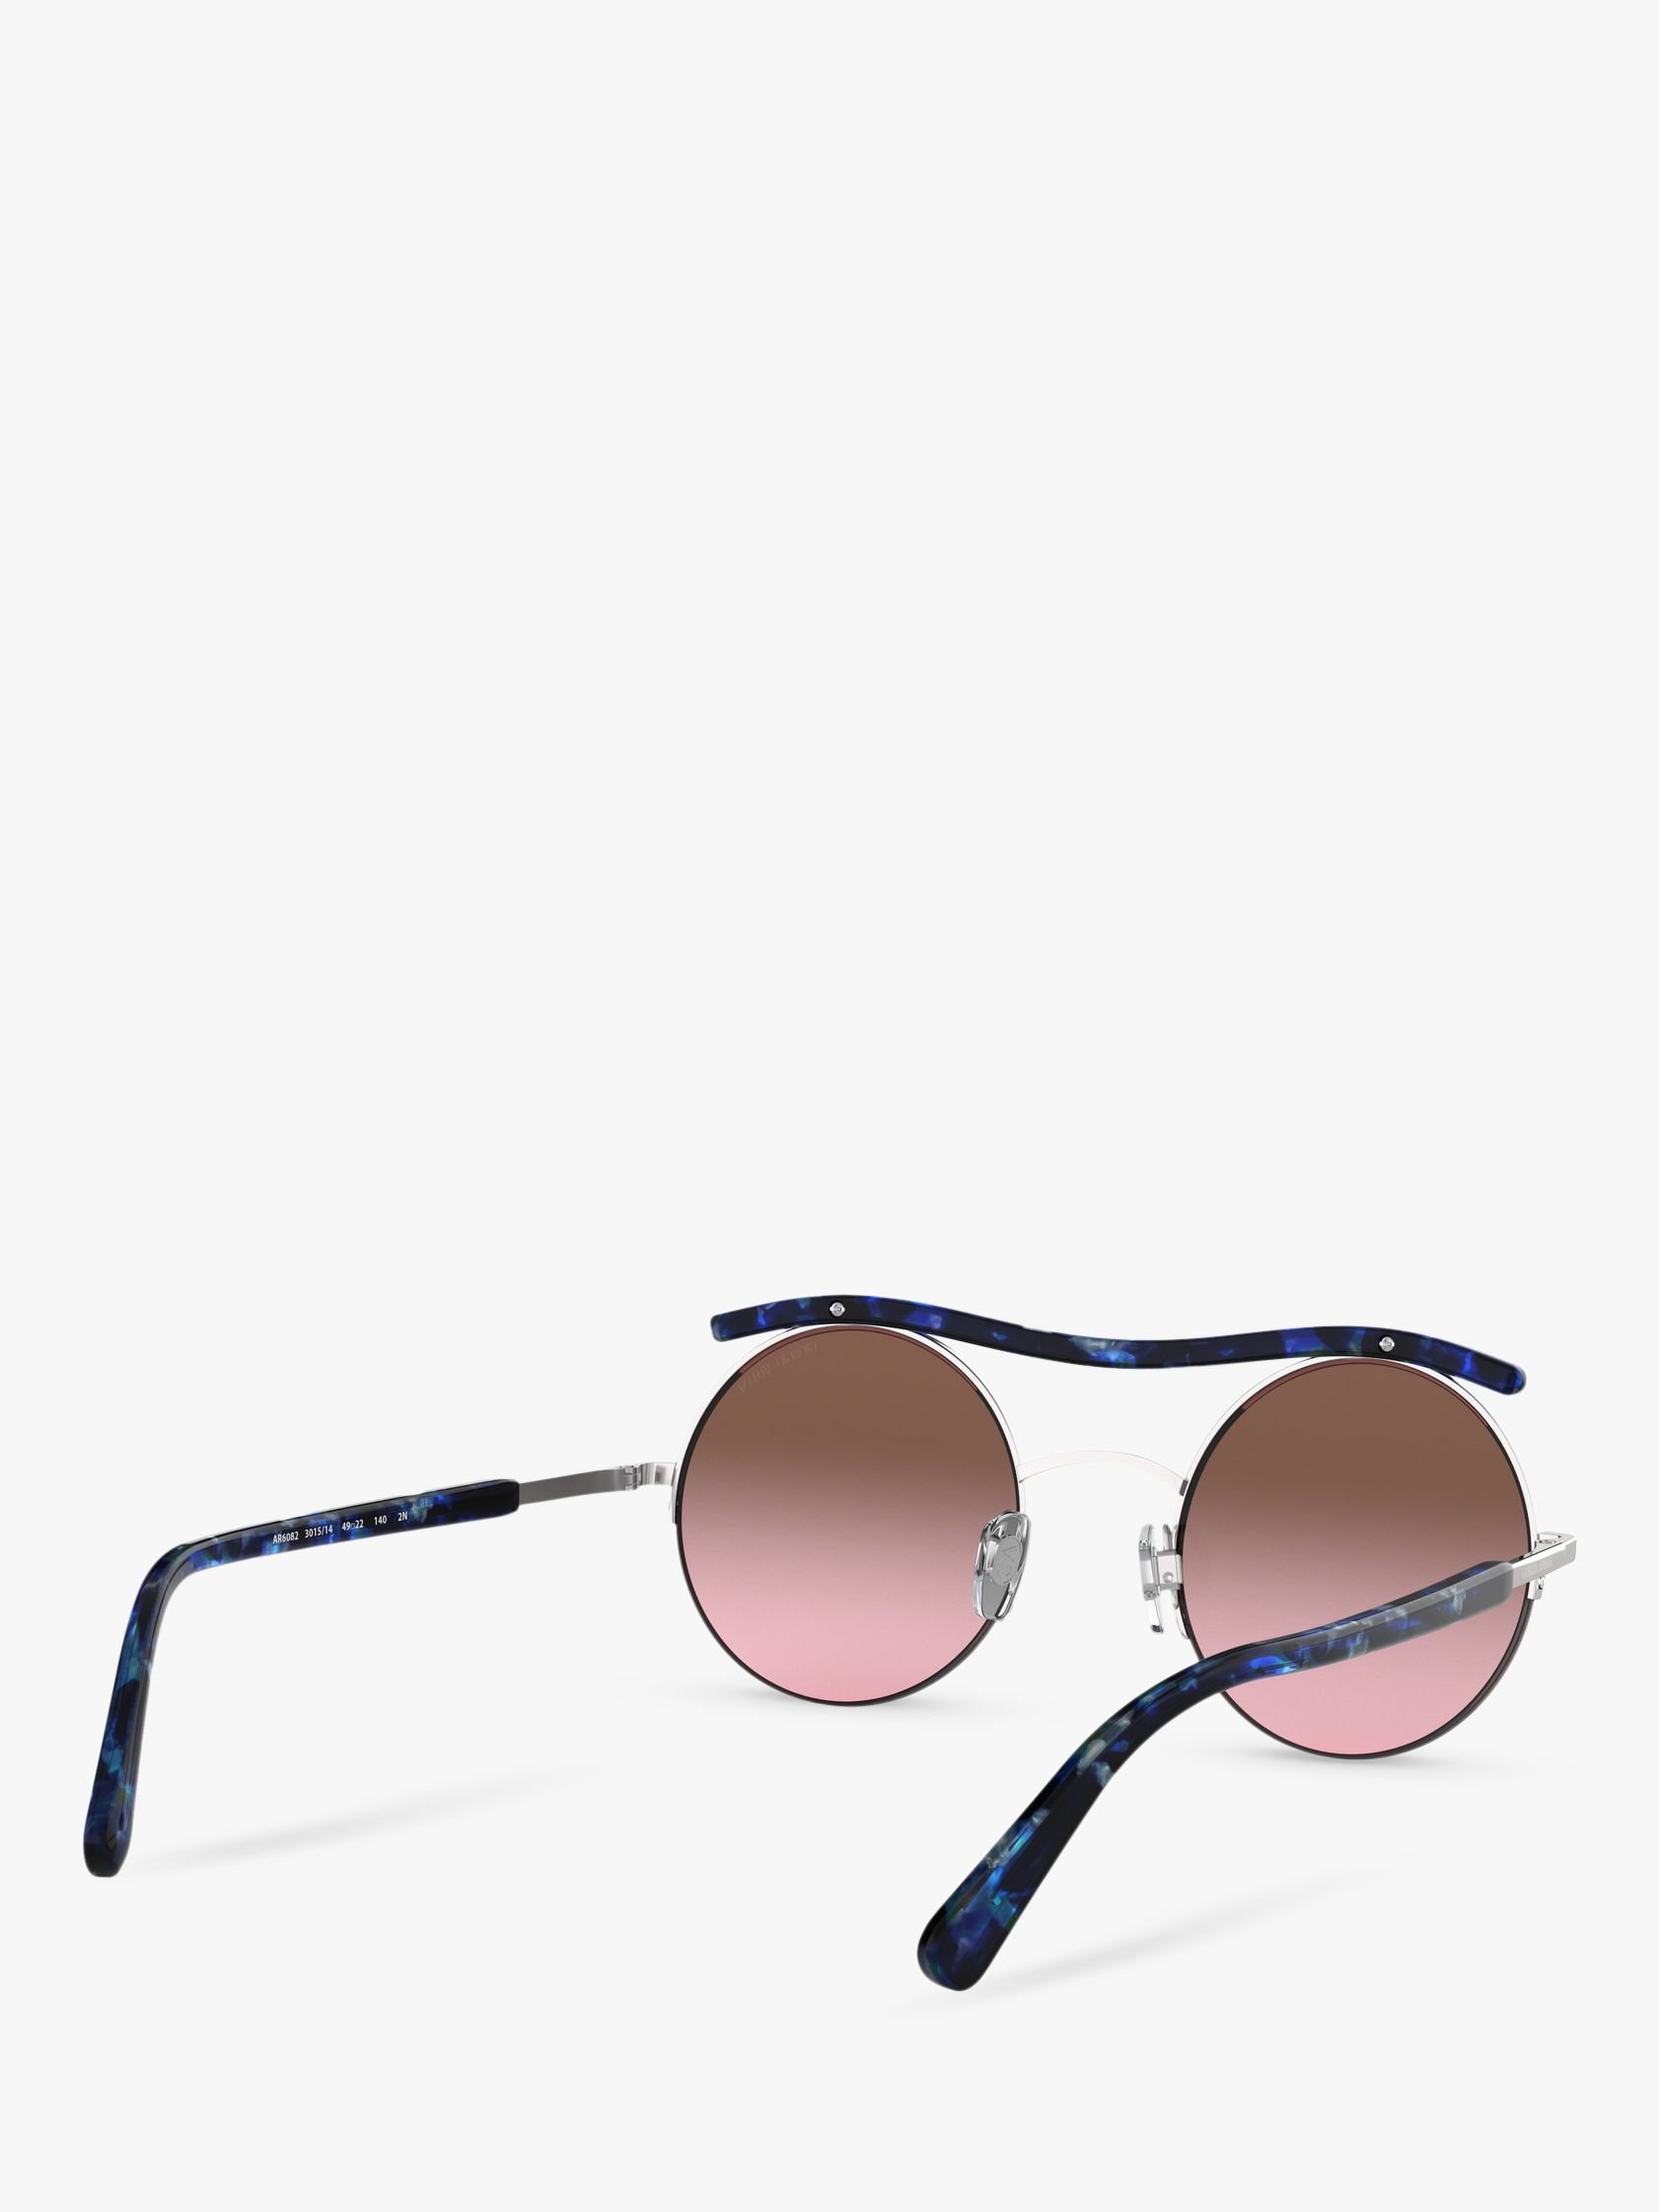 Giorgio Armani AR6082 Women's Round Sunglasses, Tortoise Blue/Purple Gradient